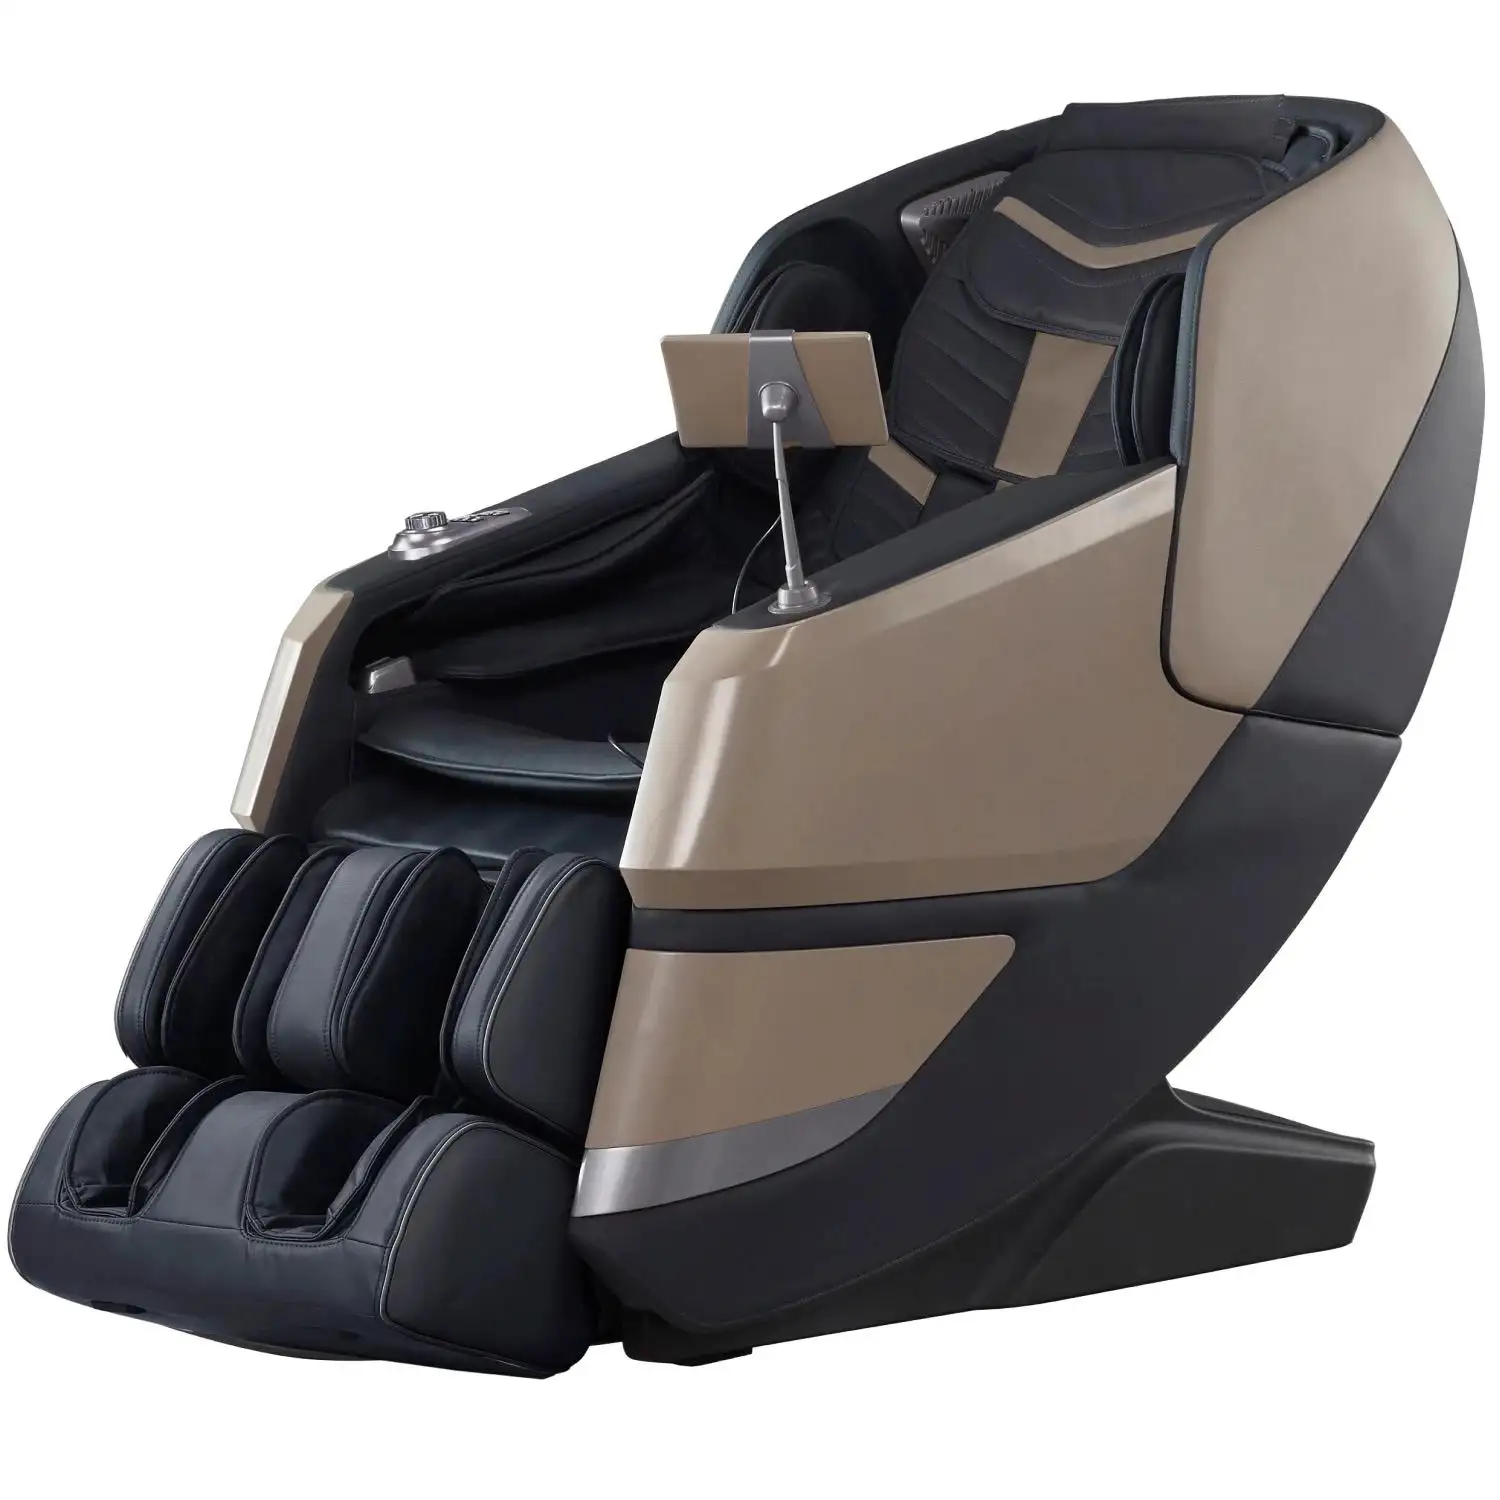 Factory 3D 4D Luxury Massage Chairs 4d Zero Gravity High Quality Foot Armchair Shiatsu Full Body Massager Chair